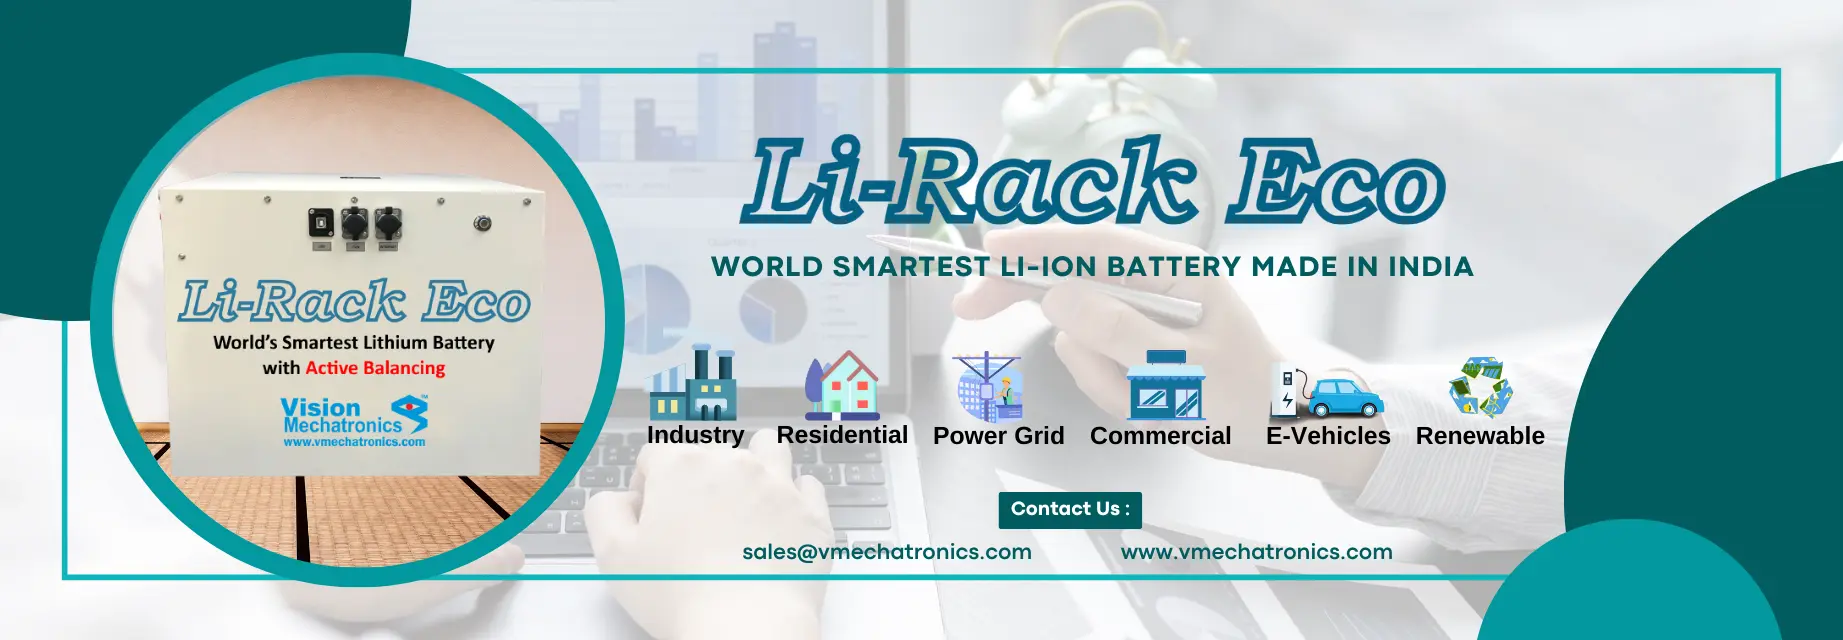 Li Rack Eco - Efficient Lithium Battery in India